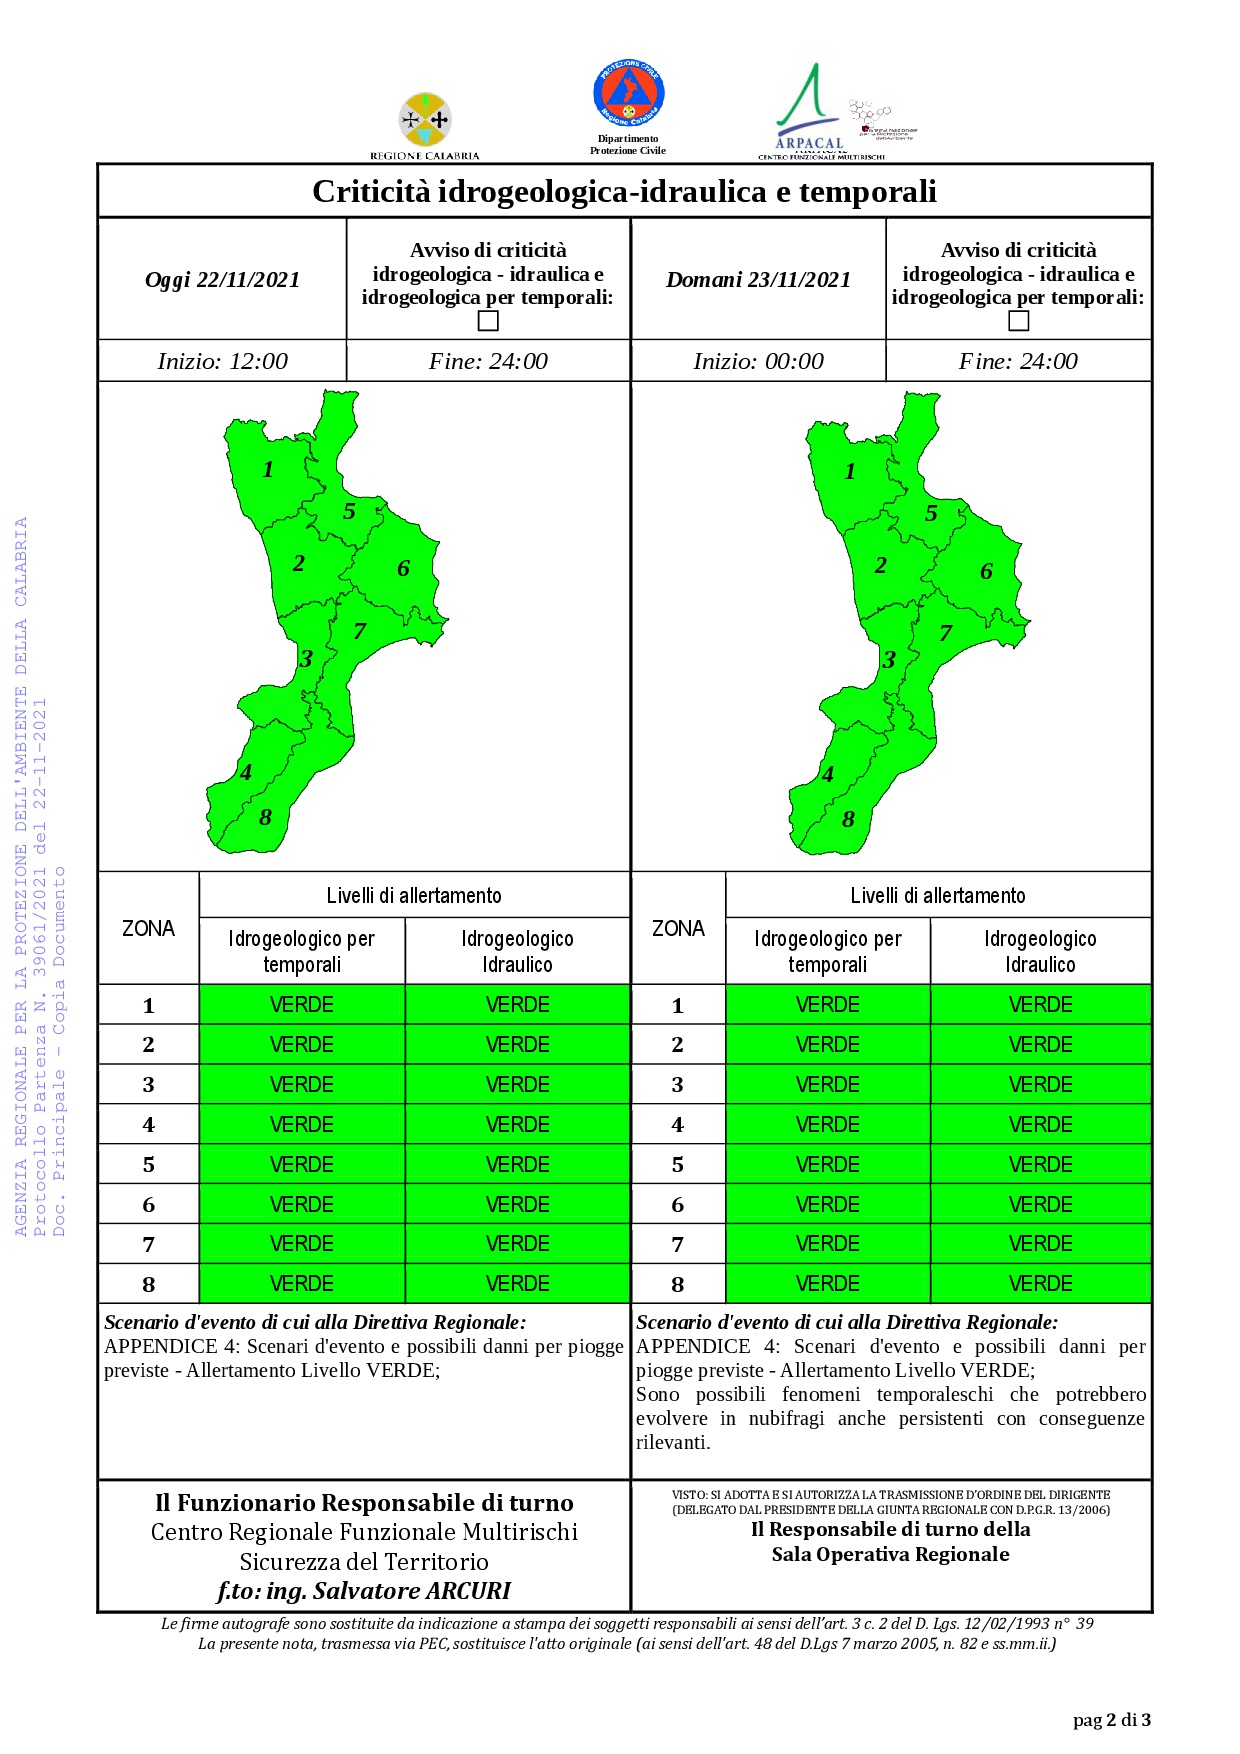 Criticità idrogeologica-idraulica e temporali in Calabria 22-11-2021